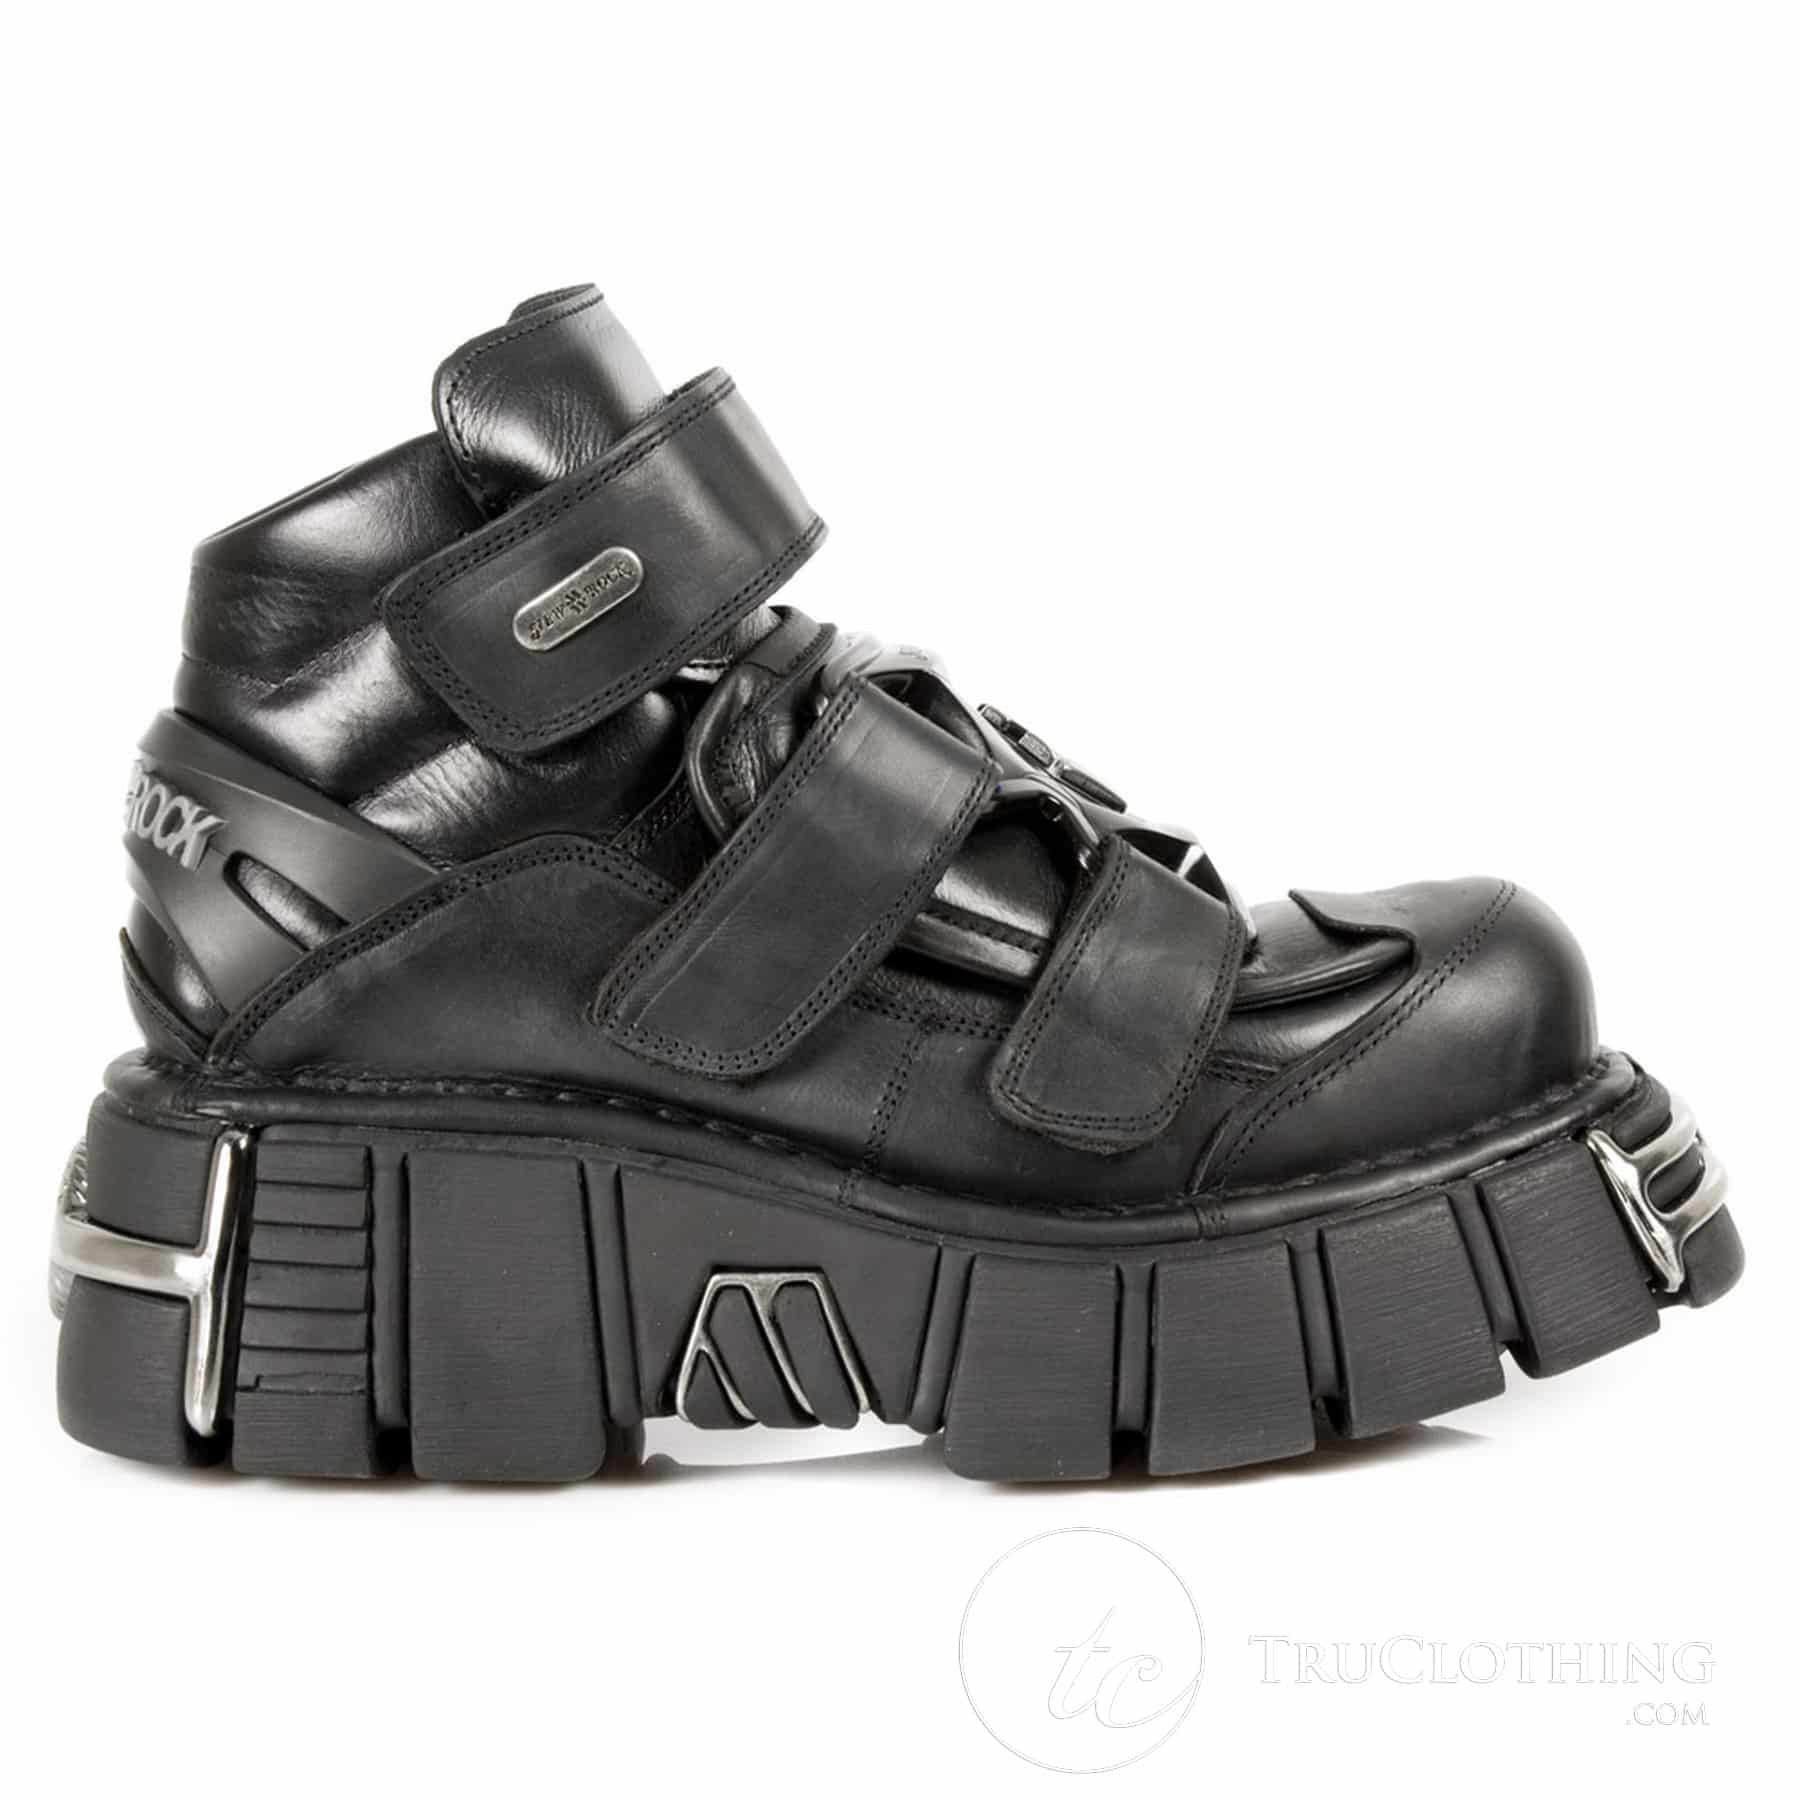 M.285-S1 New Rock Unisex Shoes Metallic Leather Biker Gothic Velcro ...